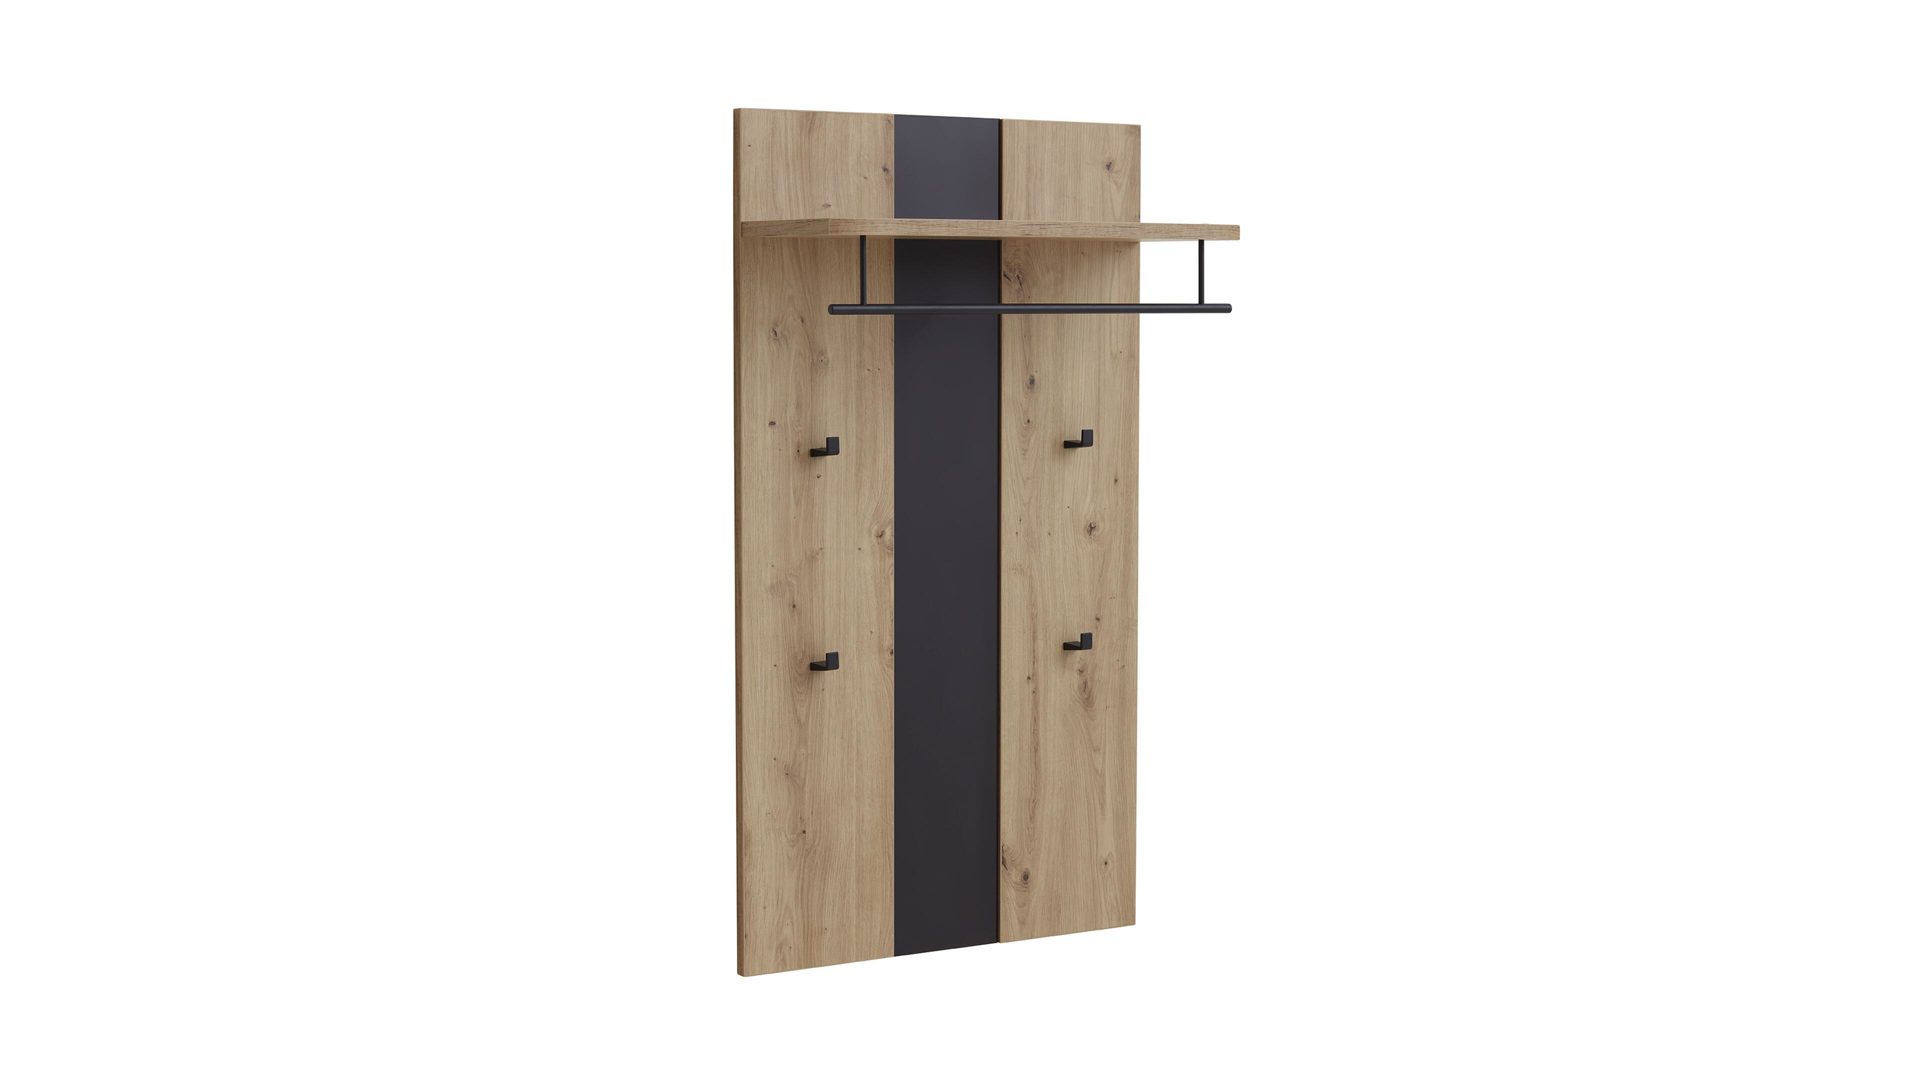 Wandgarderobe Mca furniture aus Holz in Holzfarben Wandgarderobe Argos Balkeneiche & Cosmos Grau – ca. 67 x 122 cm